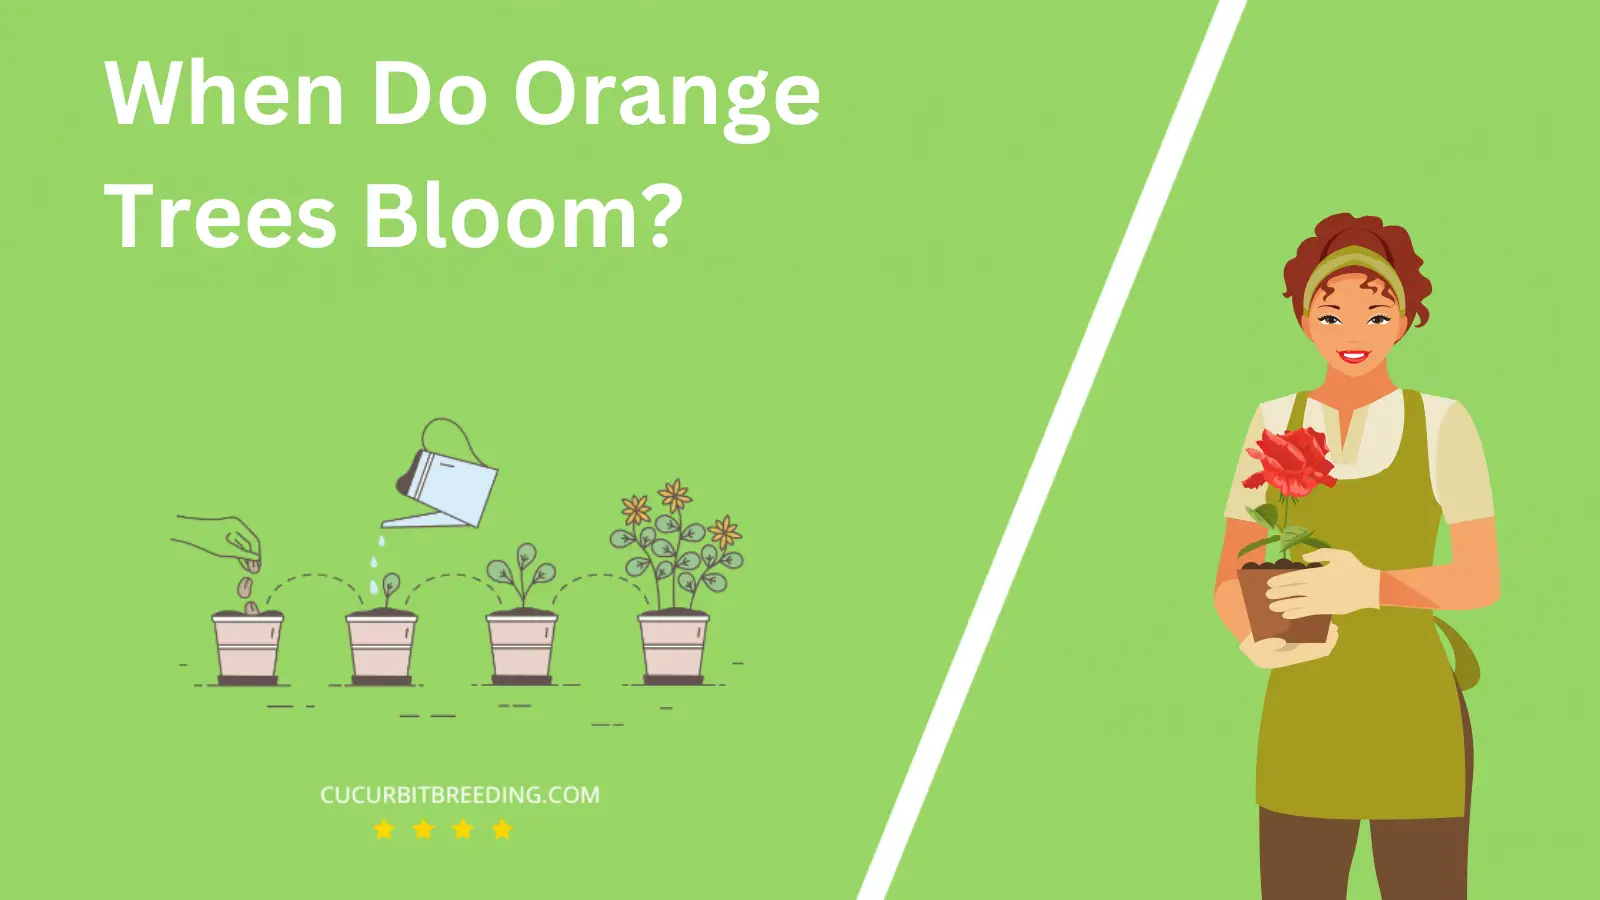 When Do Orange Trees Bloom?